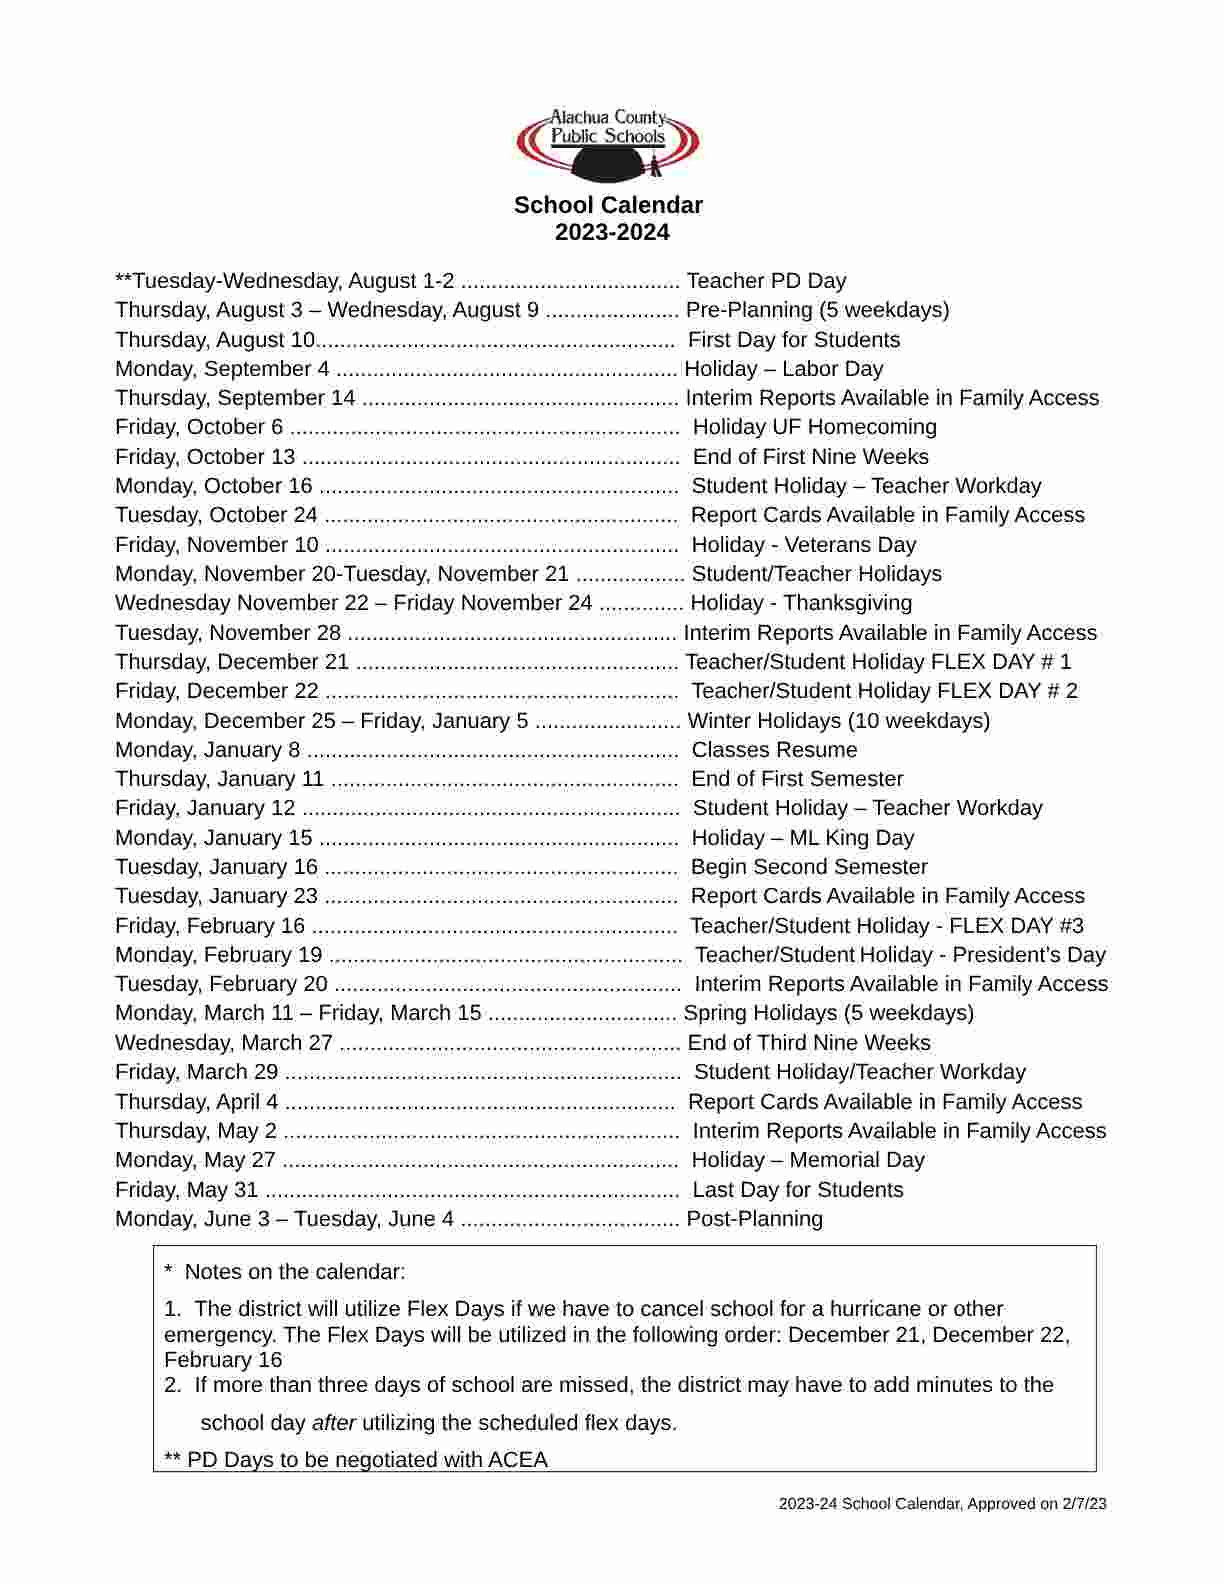 Alachua County Public Schools Calendar